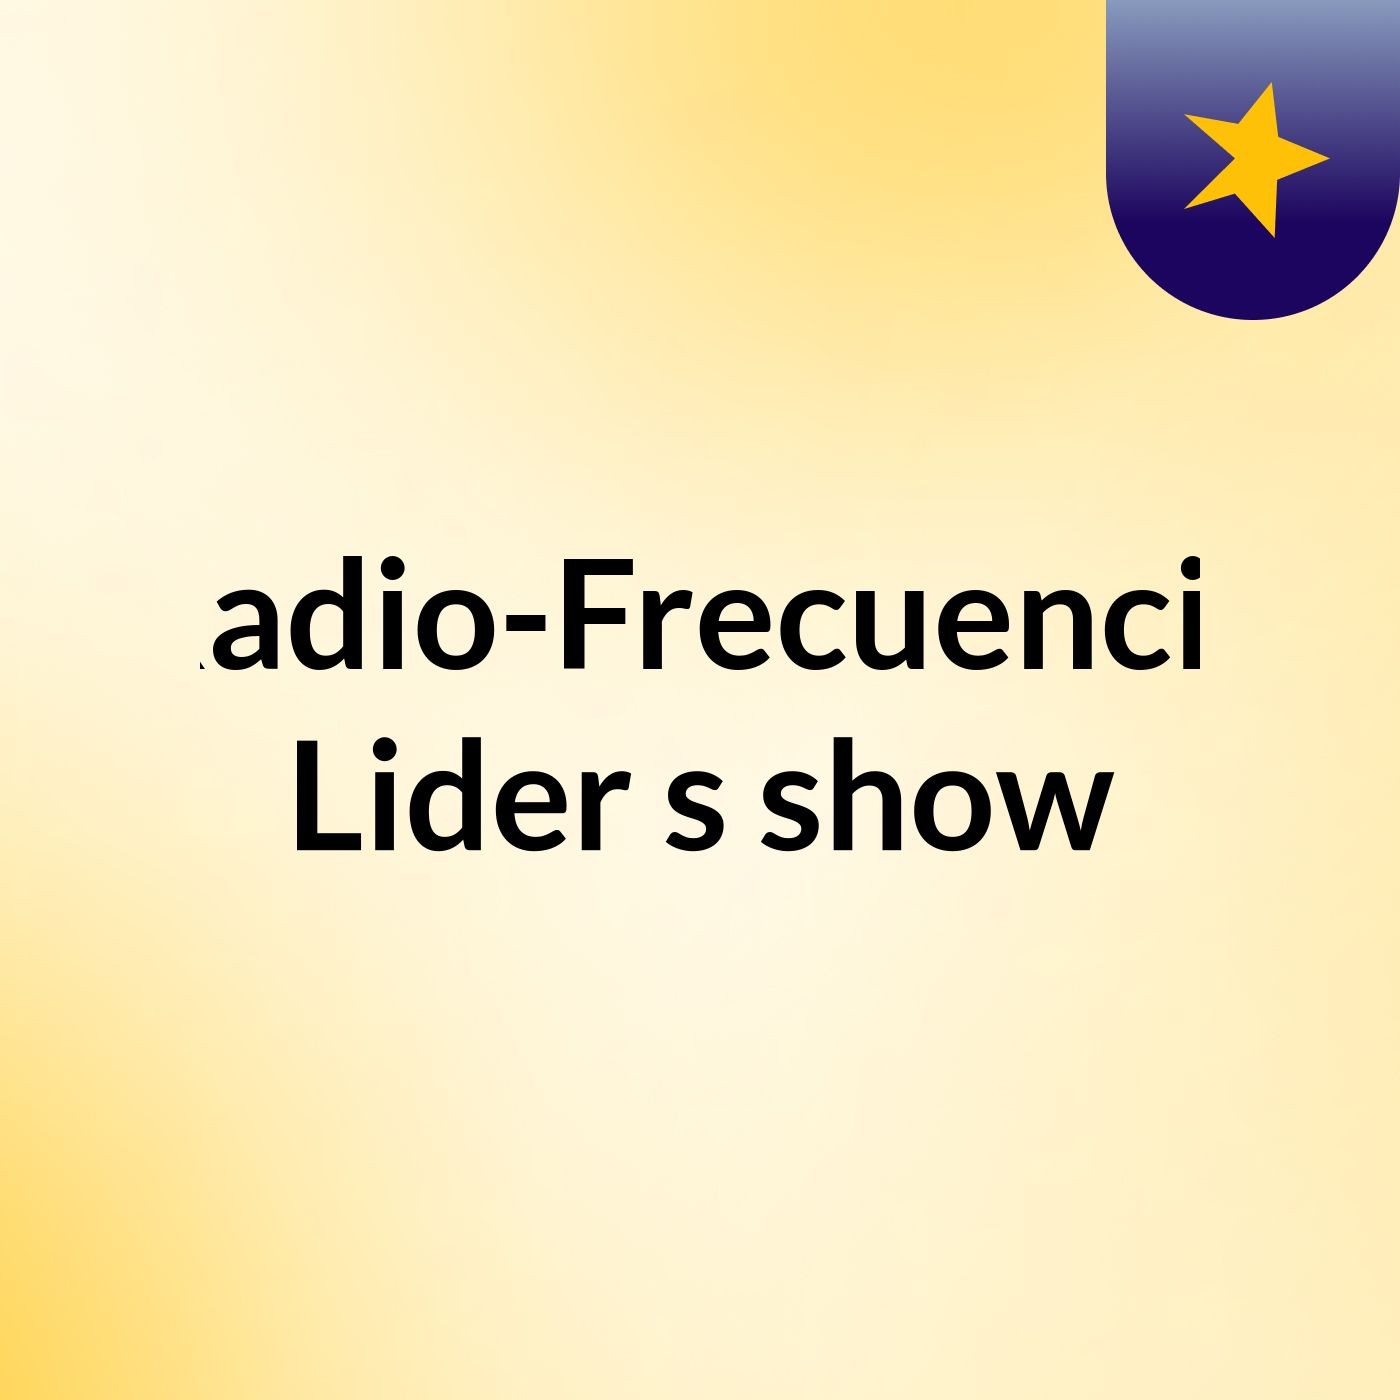 Radio-Frecuencia Lider's show